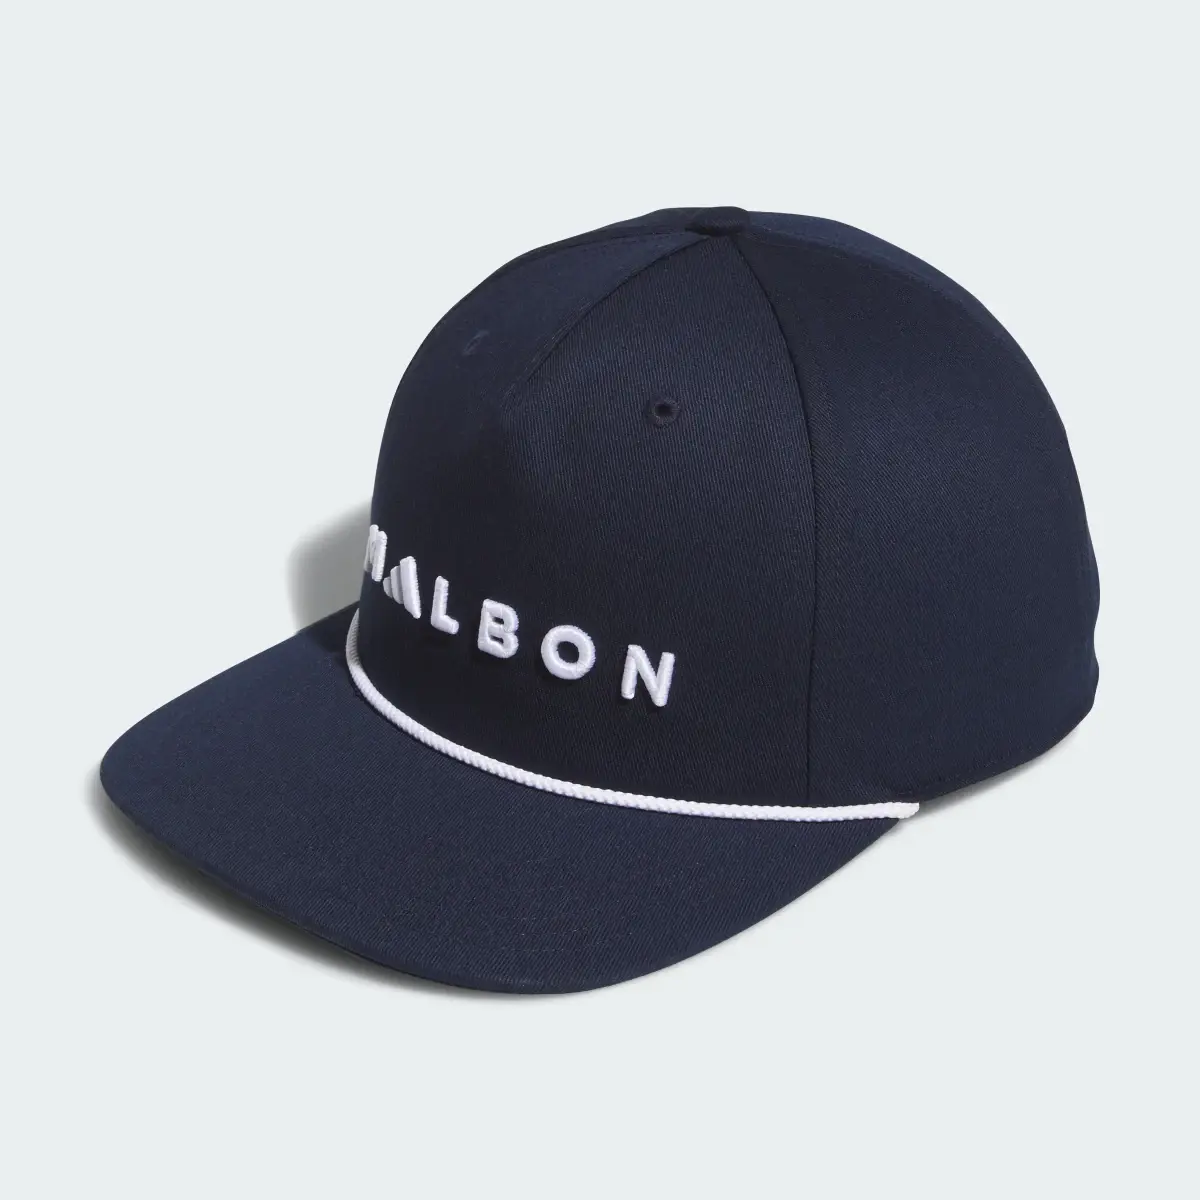 Adidas x Malbon Five-Panel Rope Hat. 2